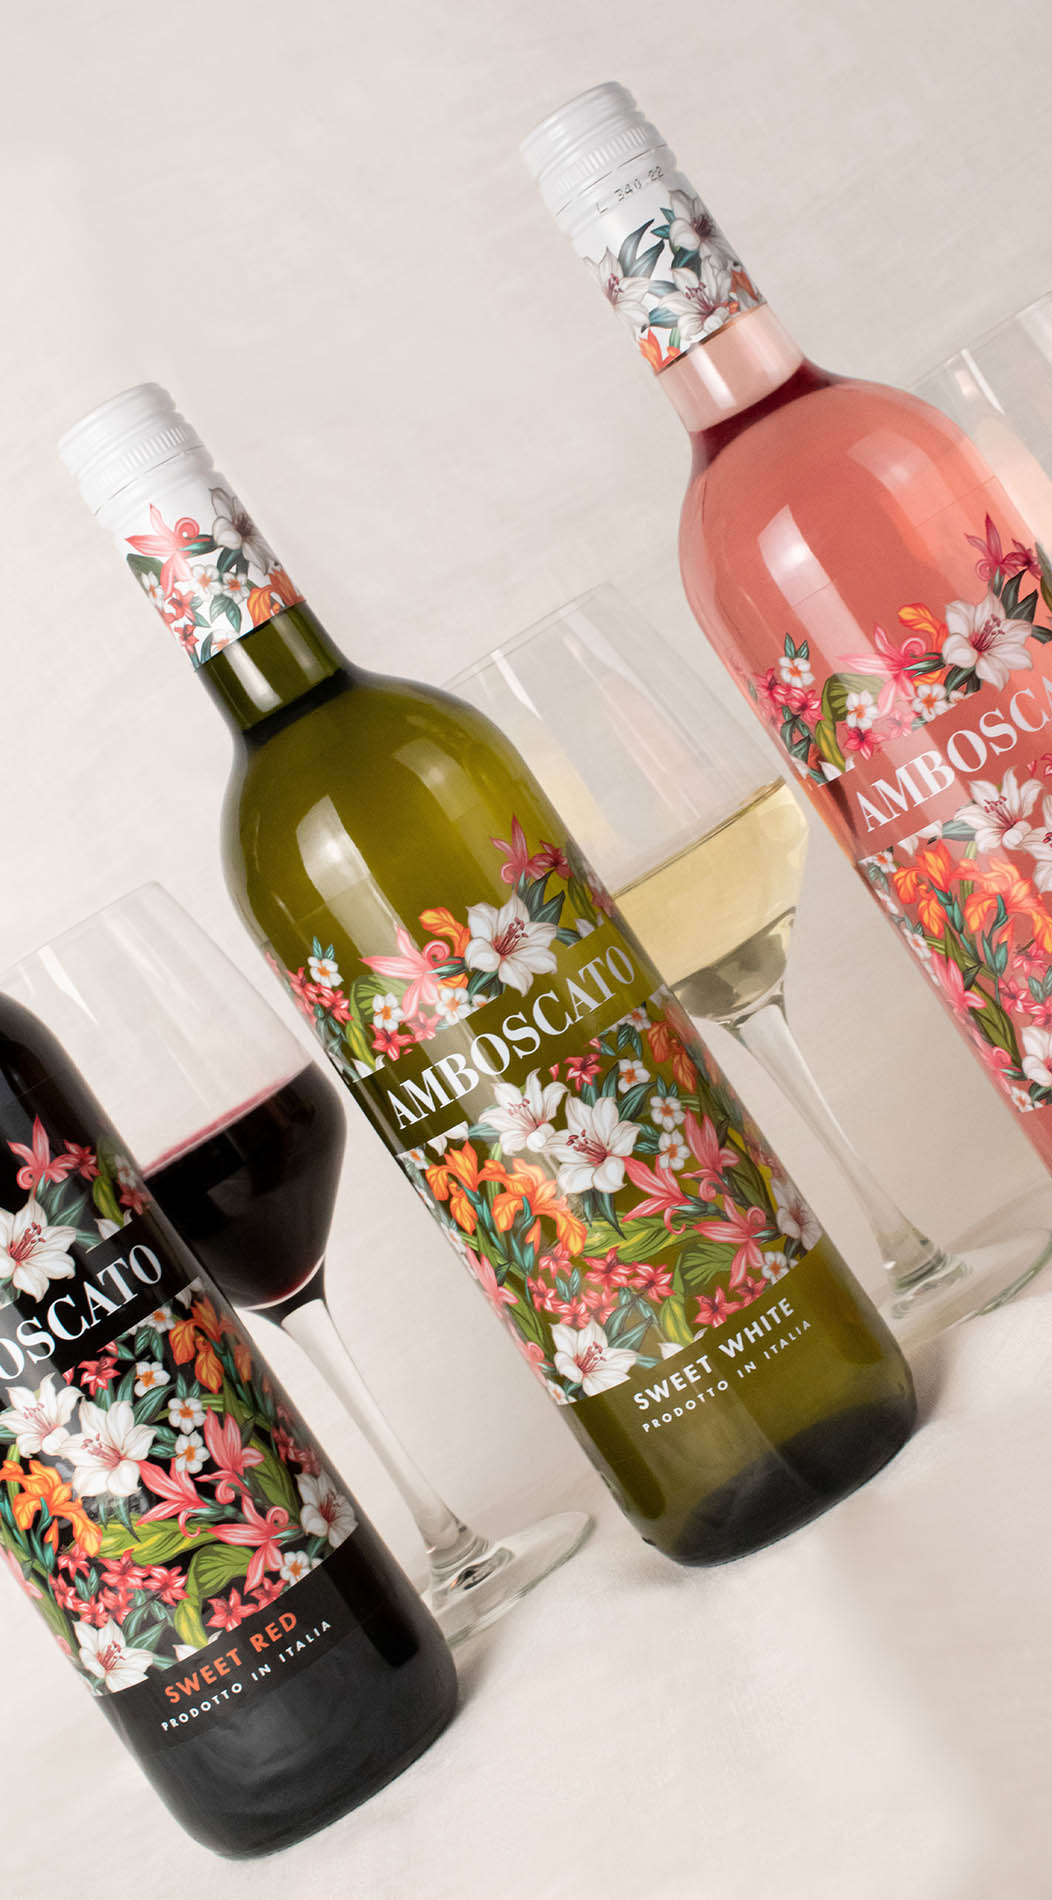 Set of Amboscato Red, White, Rosé (6 bottles) – Squis.it - US